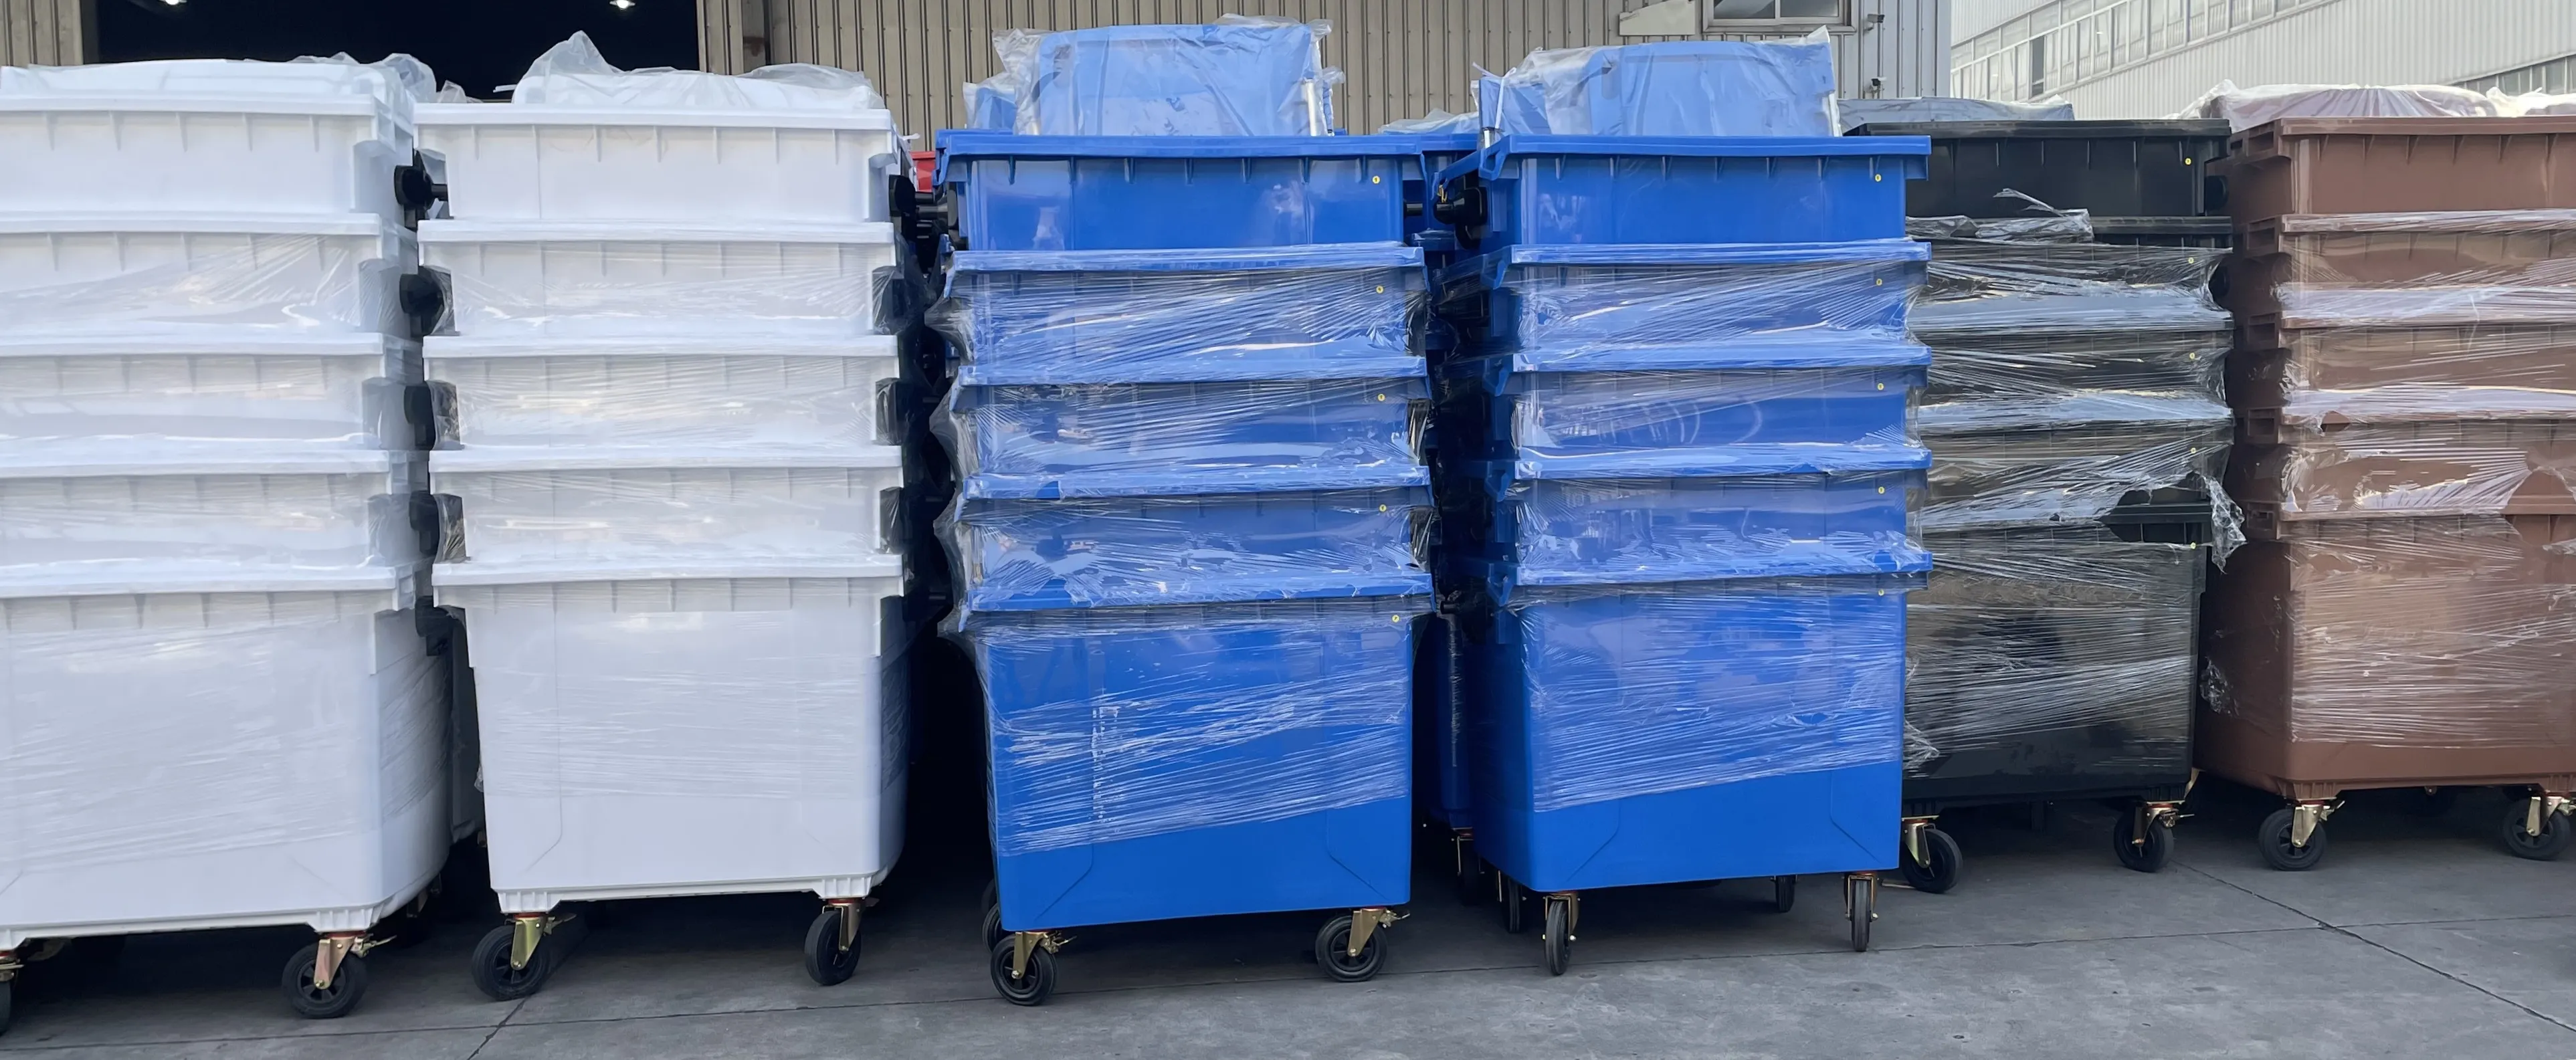 Hot selling Outdoor 1100 Liter Rectangular Plastic Wheelie Bin Trash Can Garbage Waste Bin